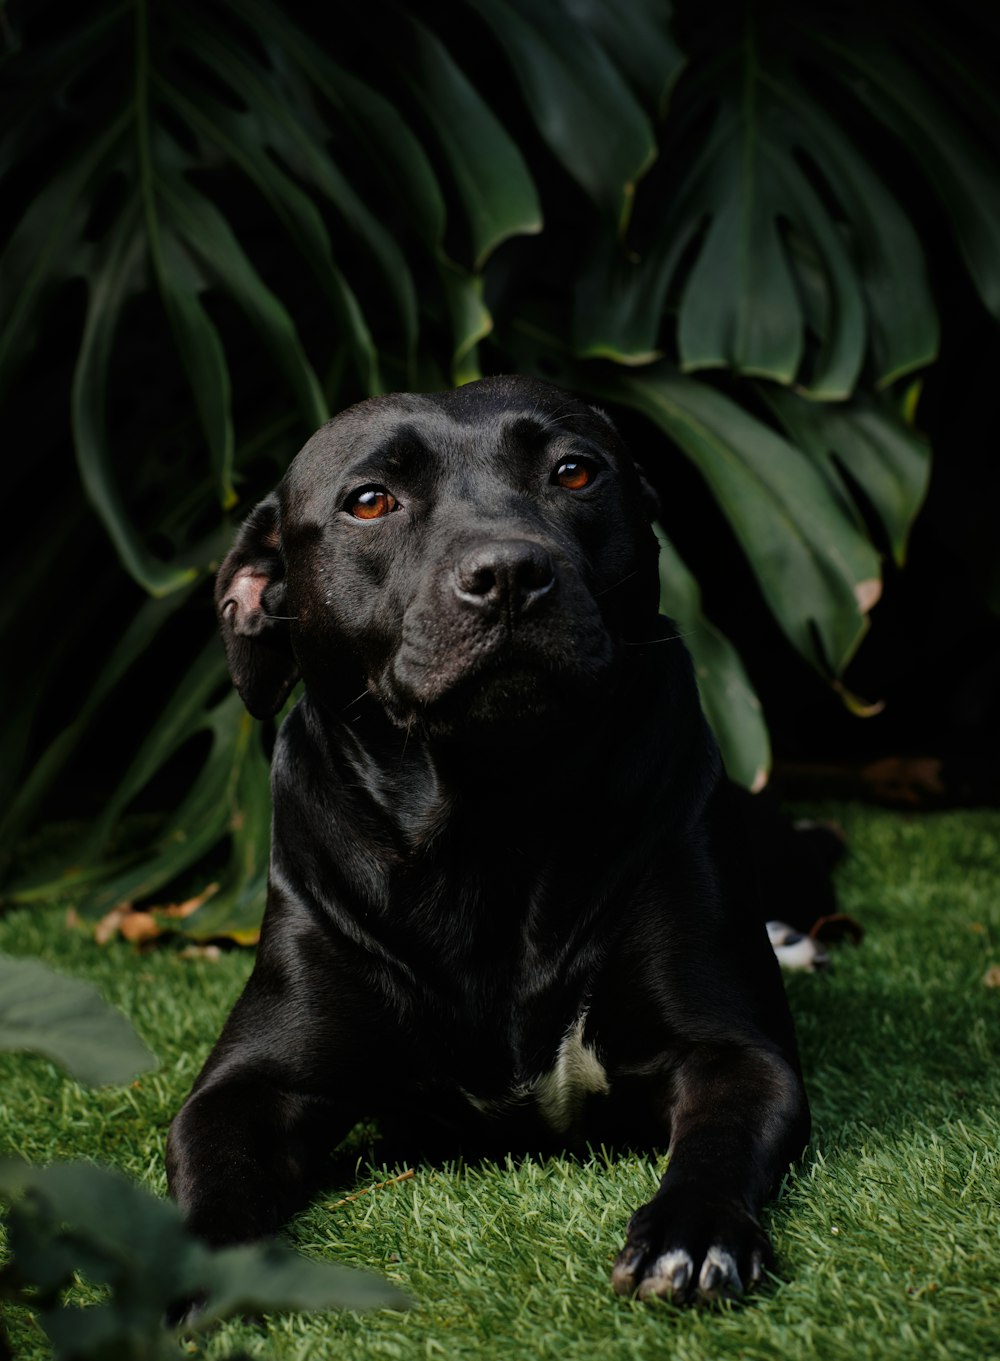 black short coated medium sized dog sitting on green grass during daytime